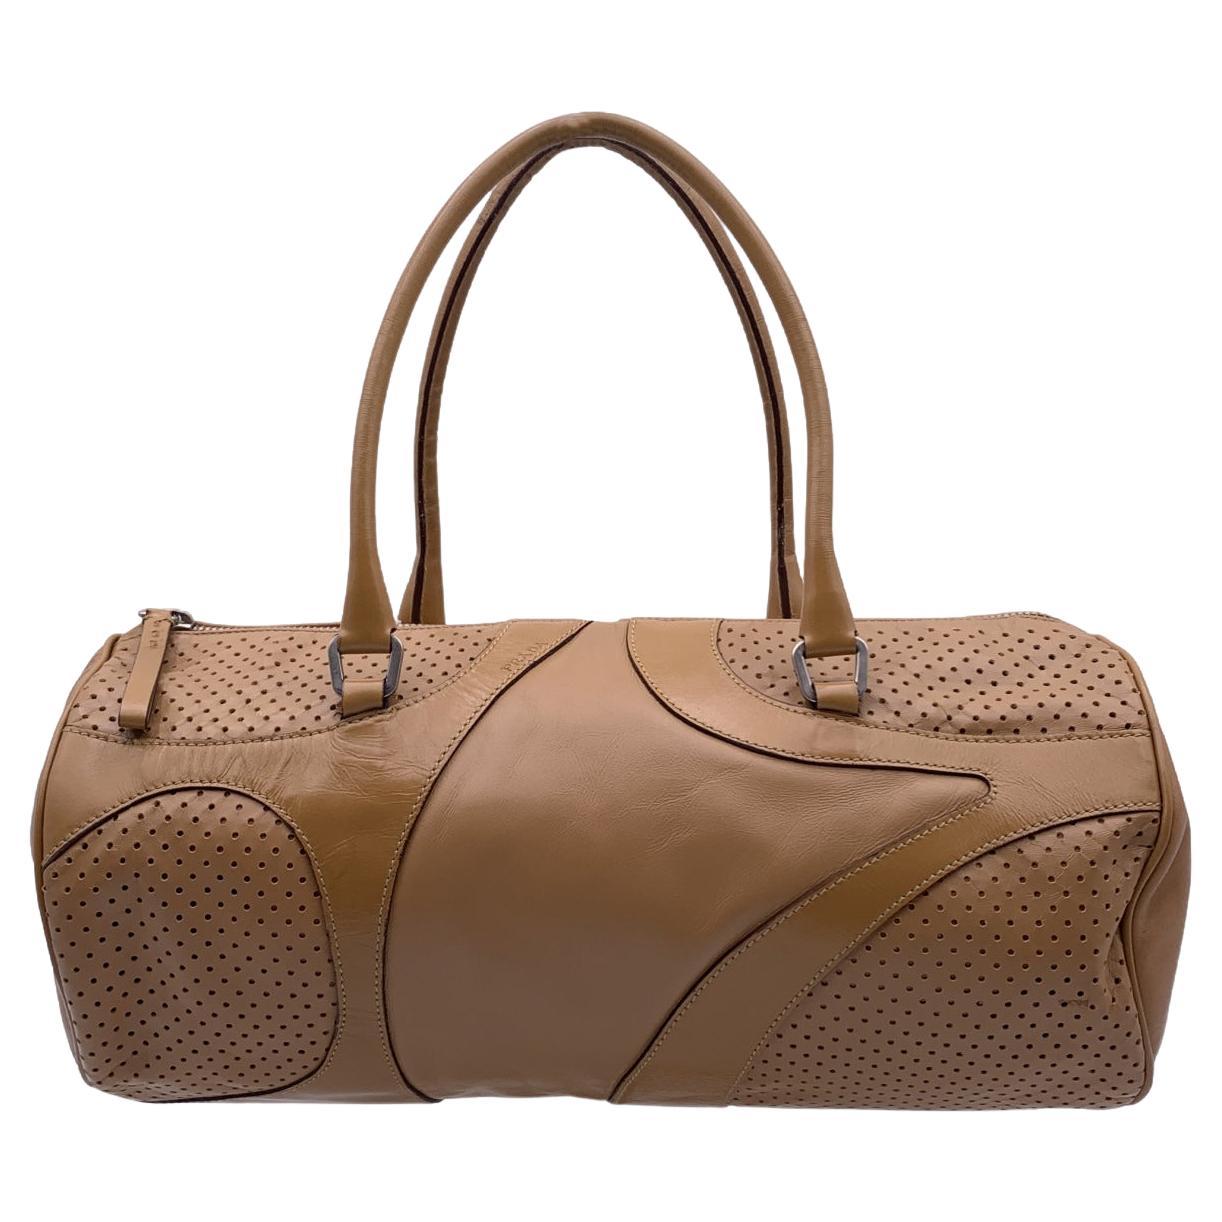 Prada Beige Leather Perforated Bowling Barrel Bag Handbag